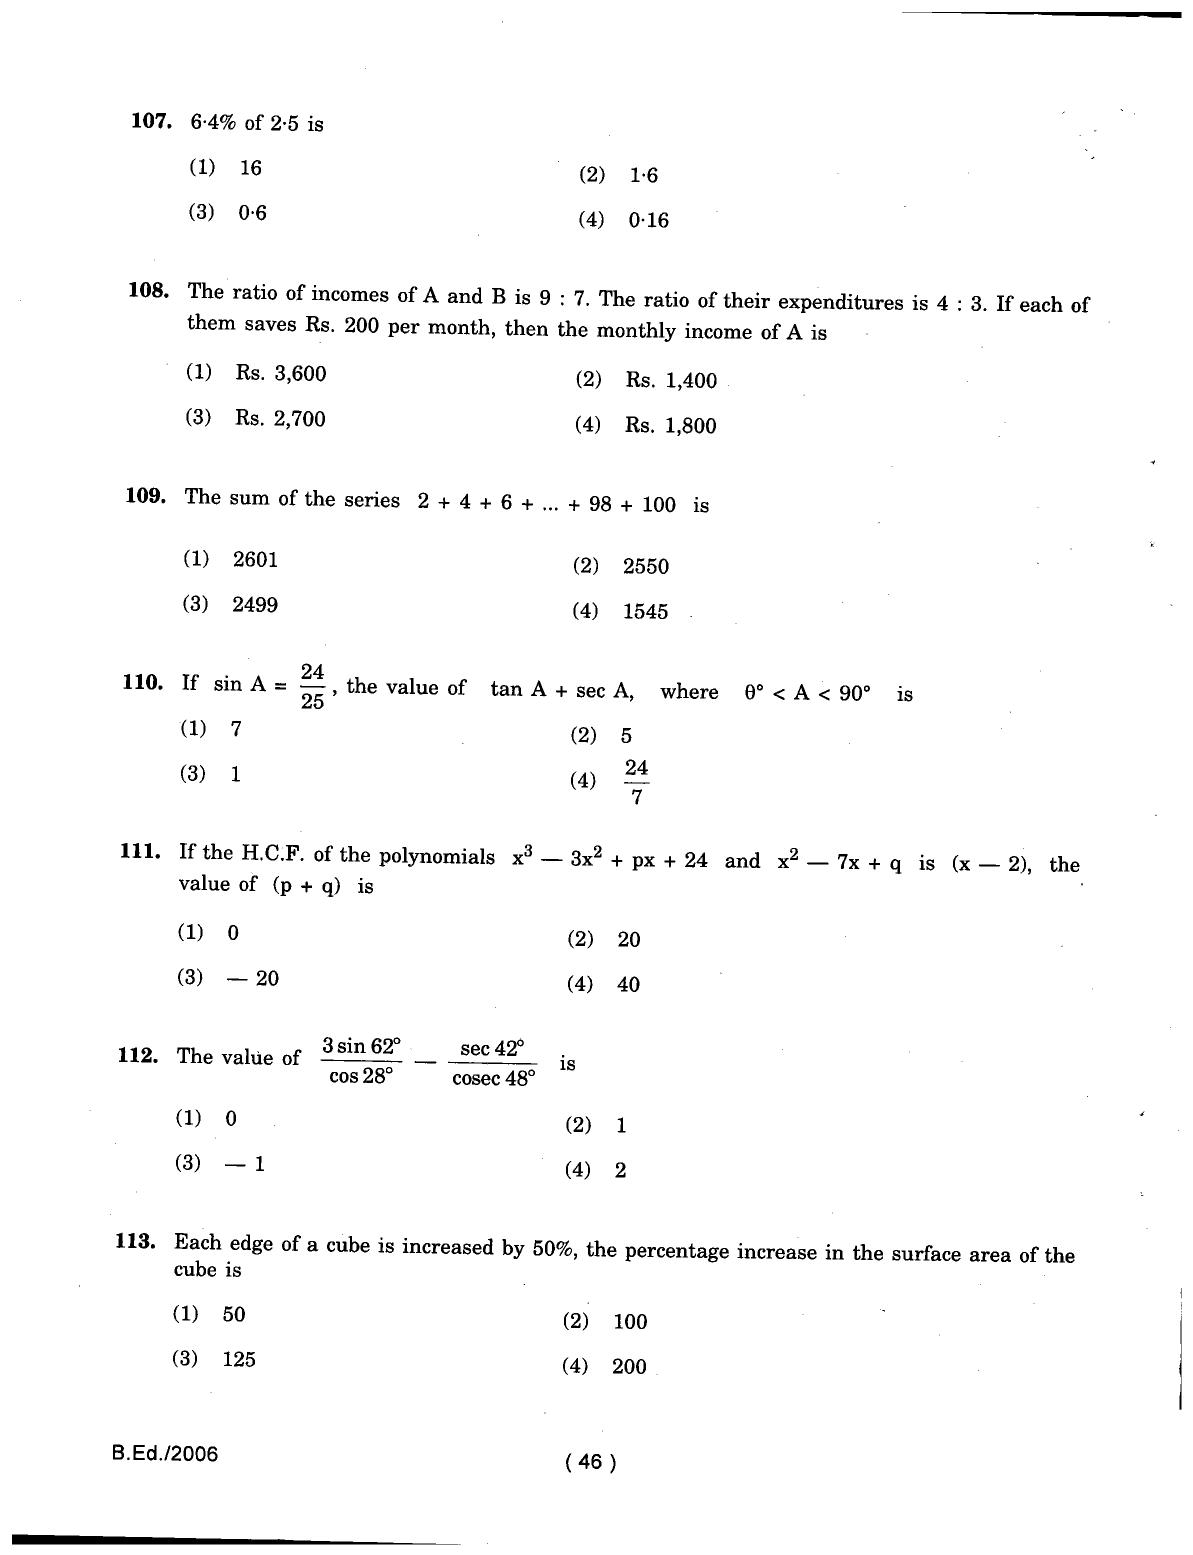 IGNOU B.Ed 2006 Question Paper - Page 46